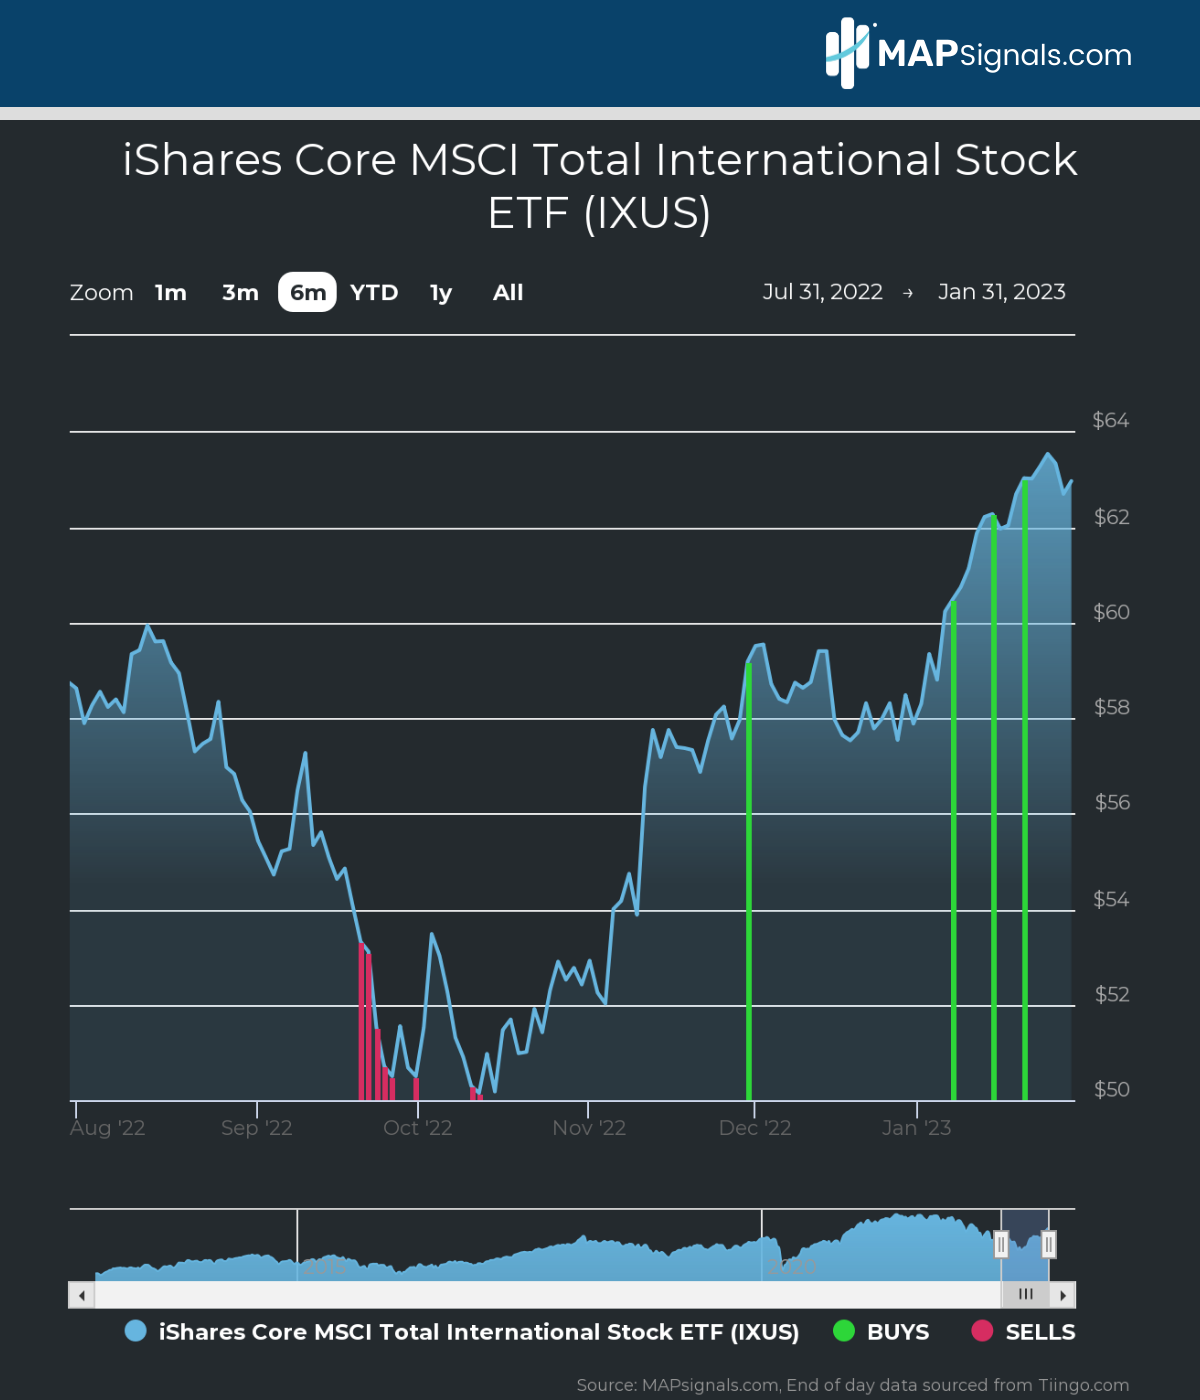 iShares Core MSCI Total International Stock ETF (IXUS) | MAPsignals